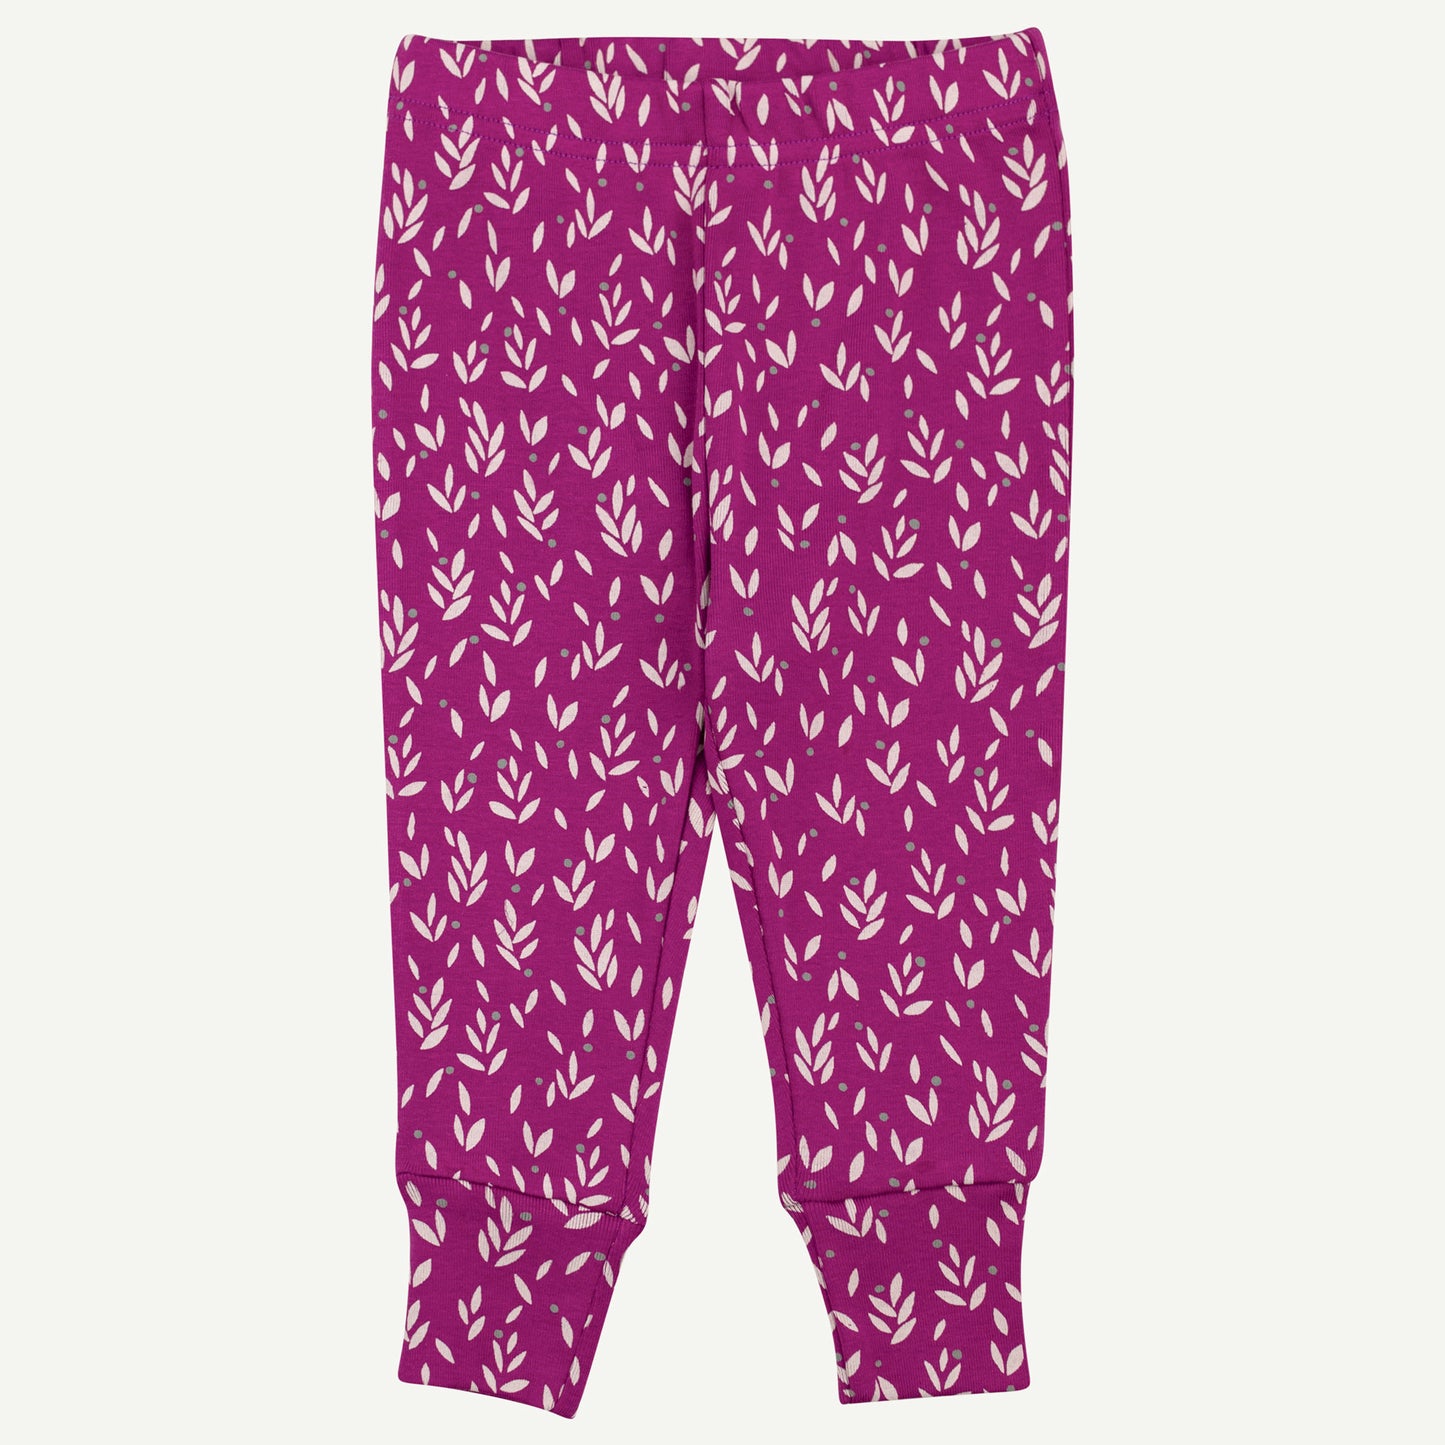 2-Piece Pajama in Purple Leaf Print - Toddler